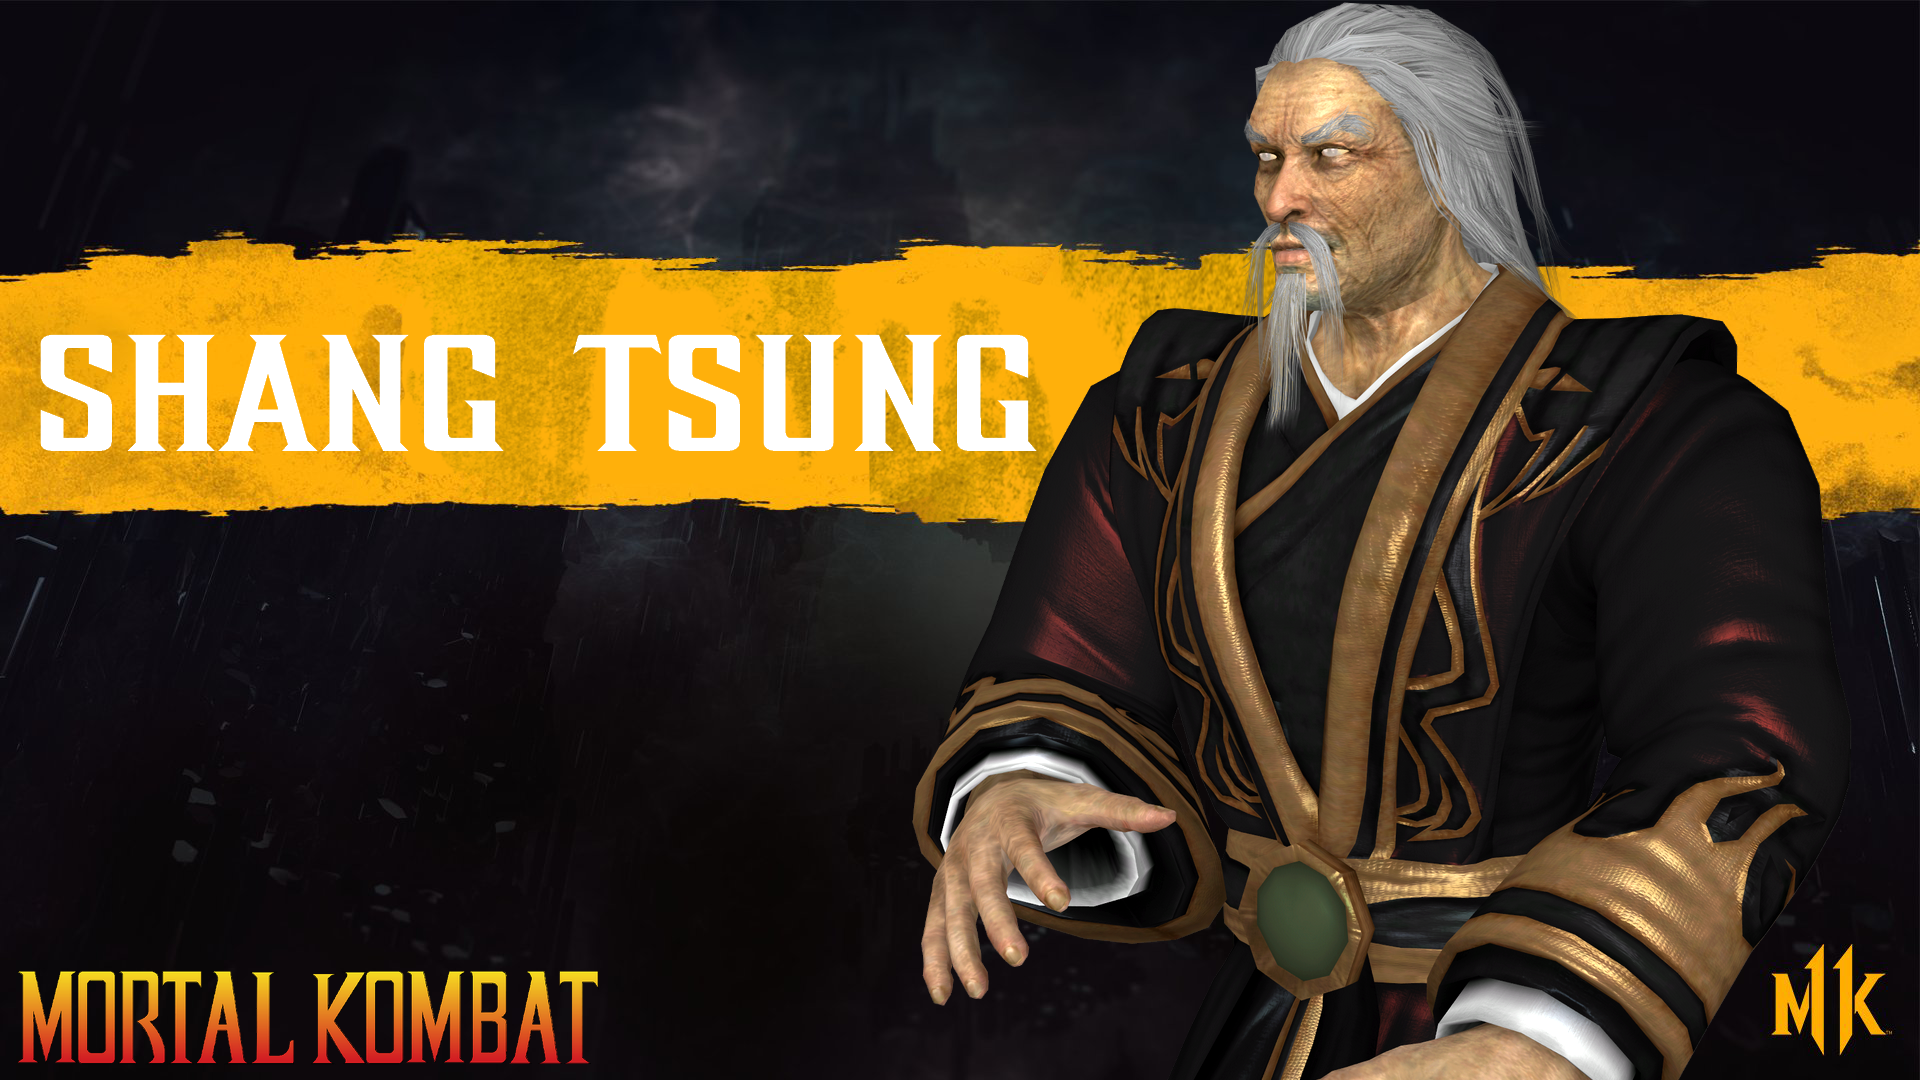 Mortal Kombat- Shang Tsung by GavinoElDiabloGuapo on DeviantArt